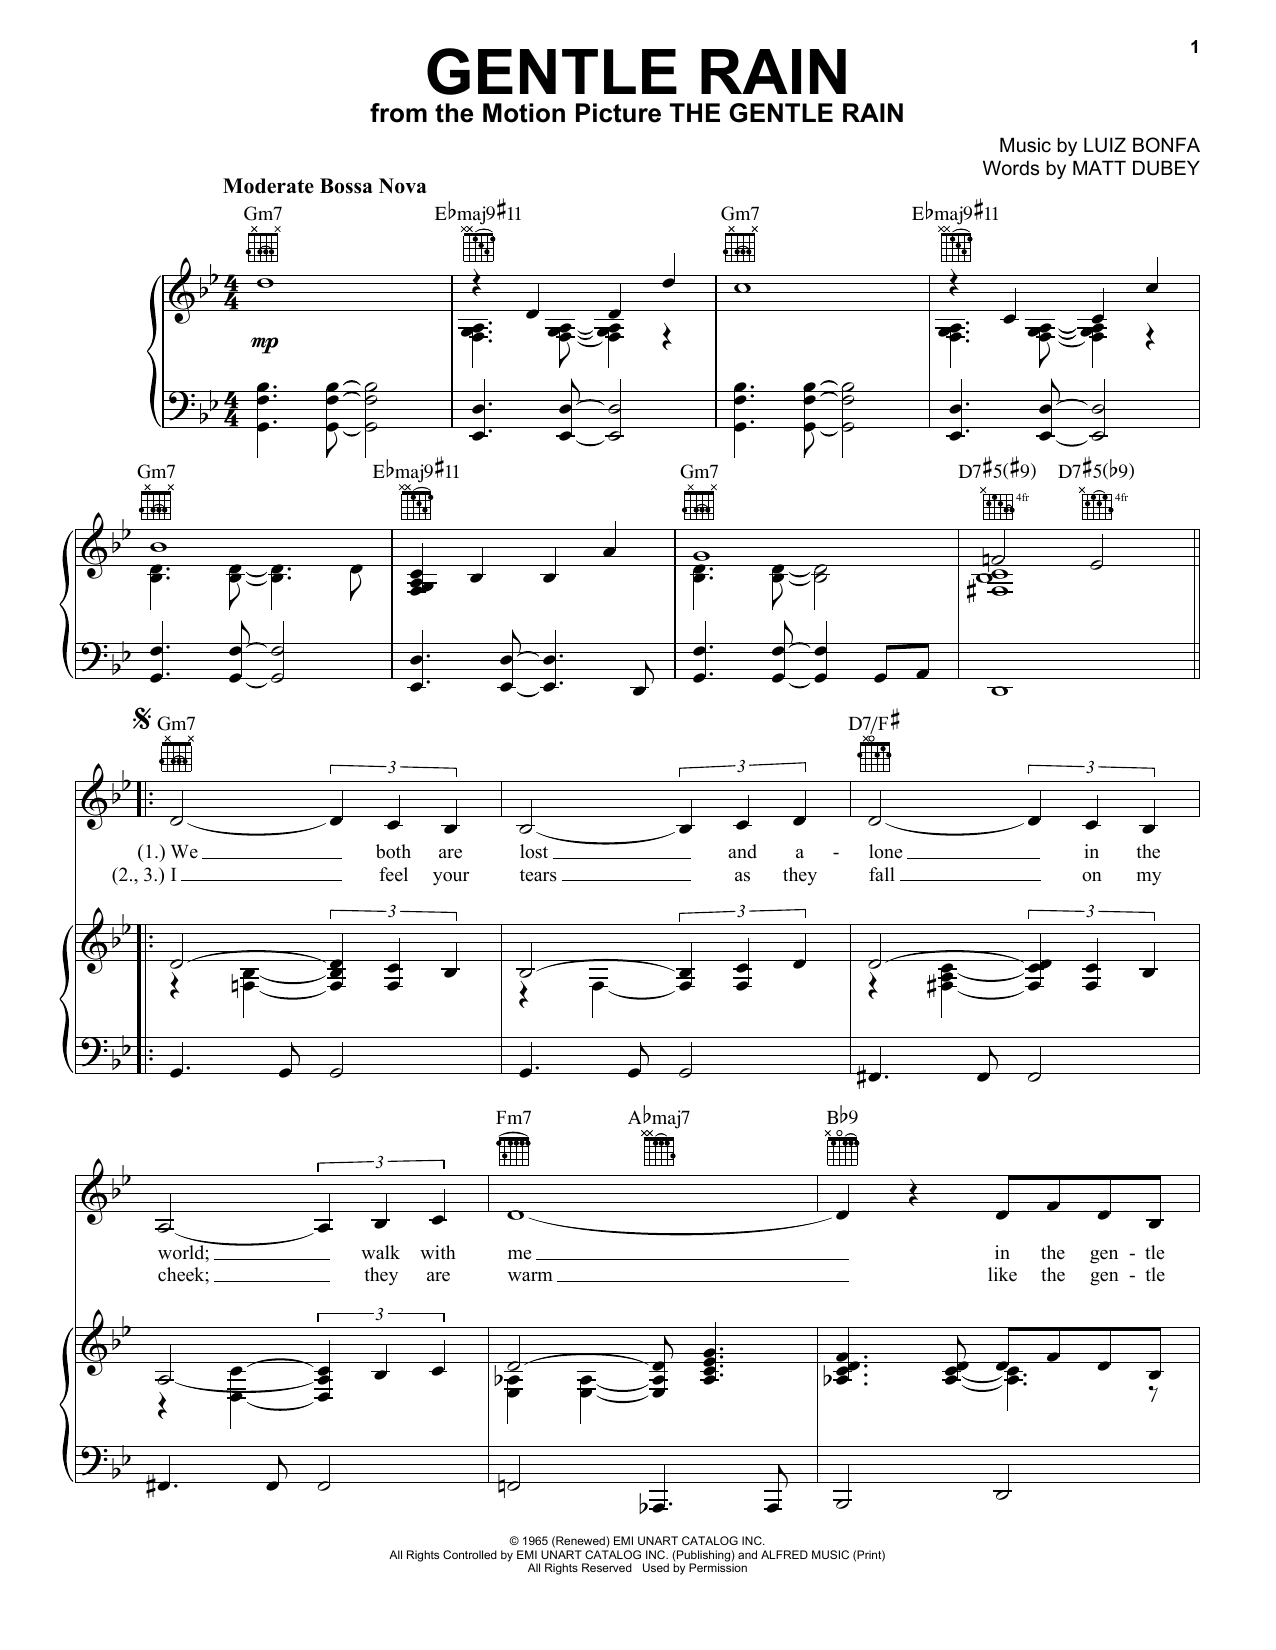 Matt Dubey Gentle Rain Sheet Music Notes & Chords for Piano - Download or Print PDF